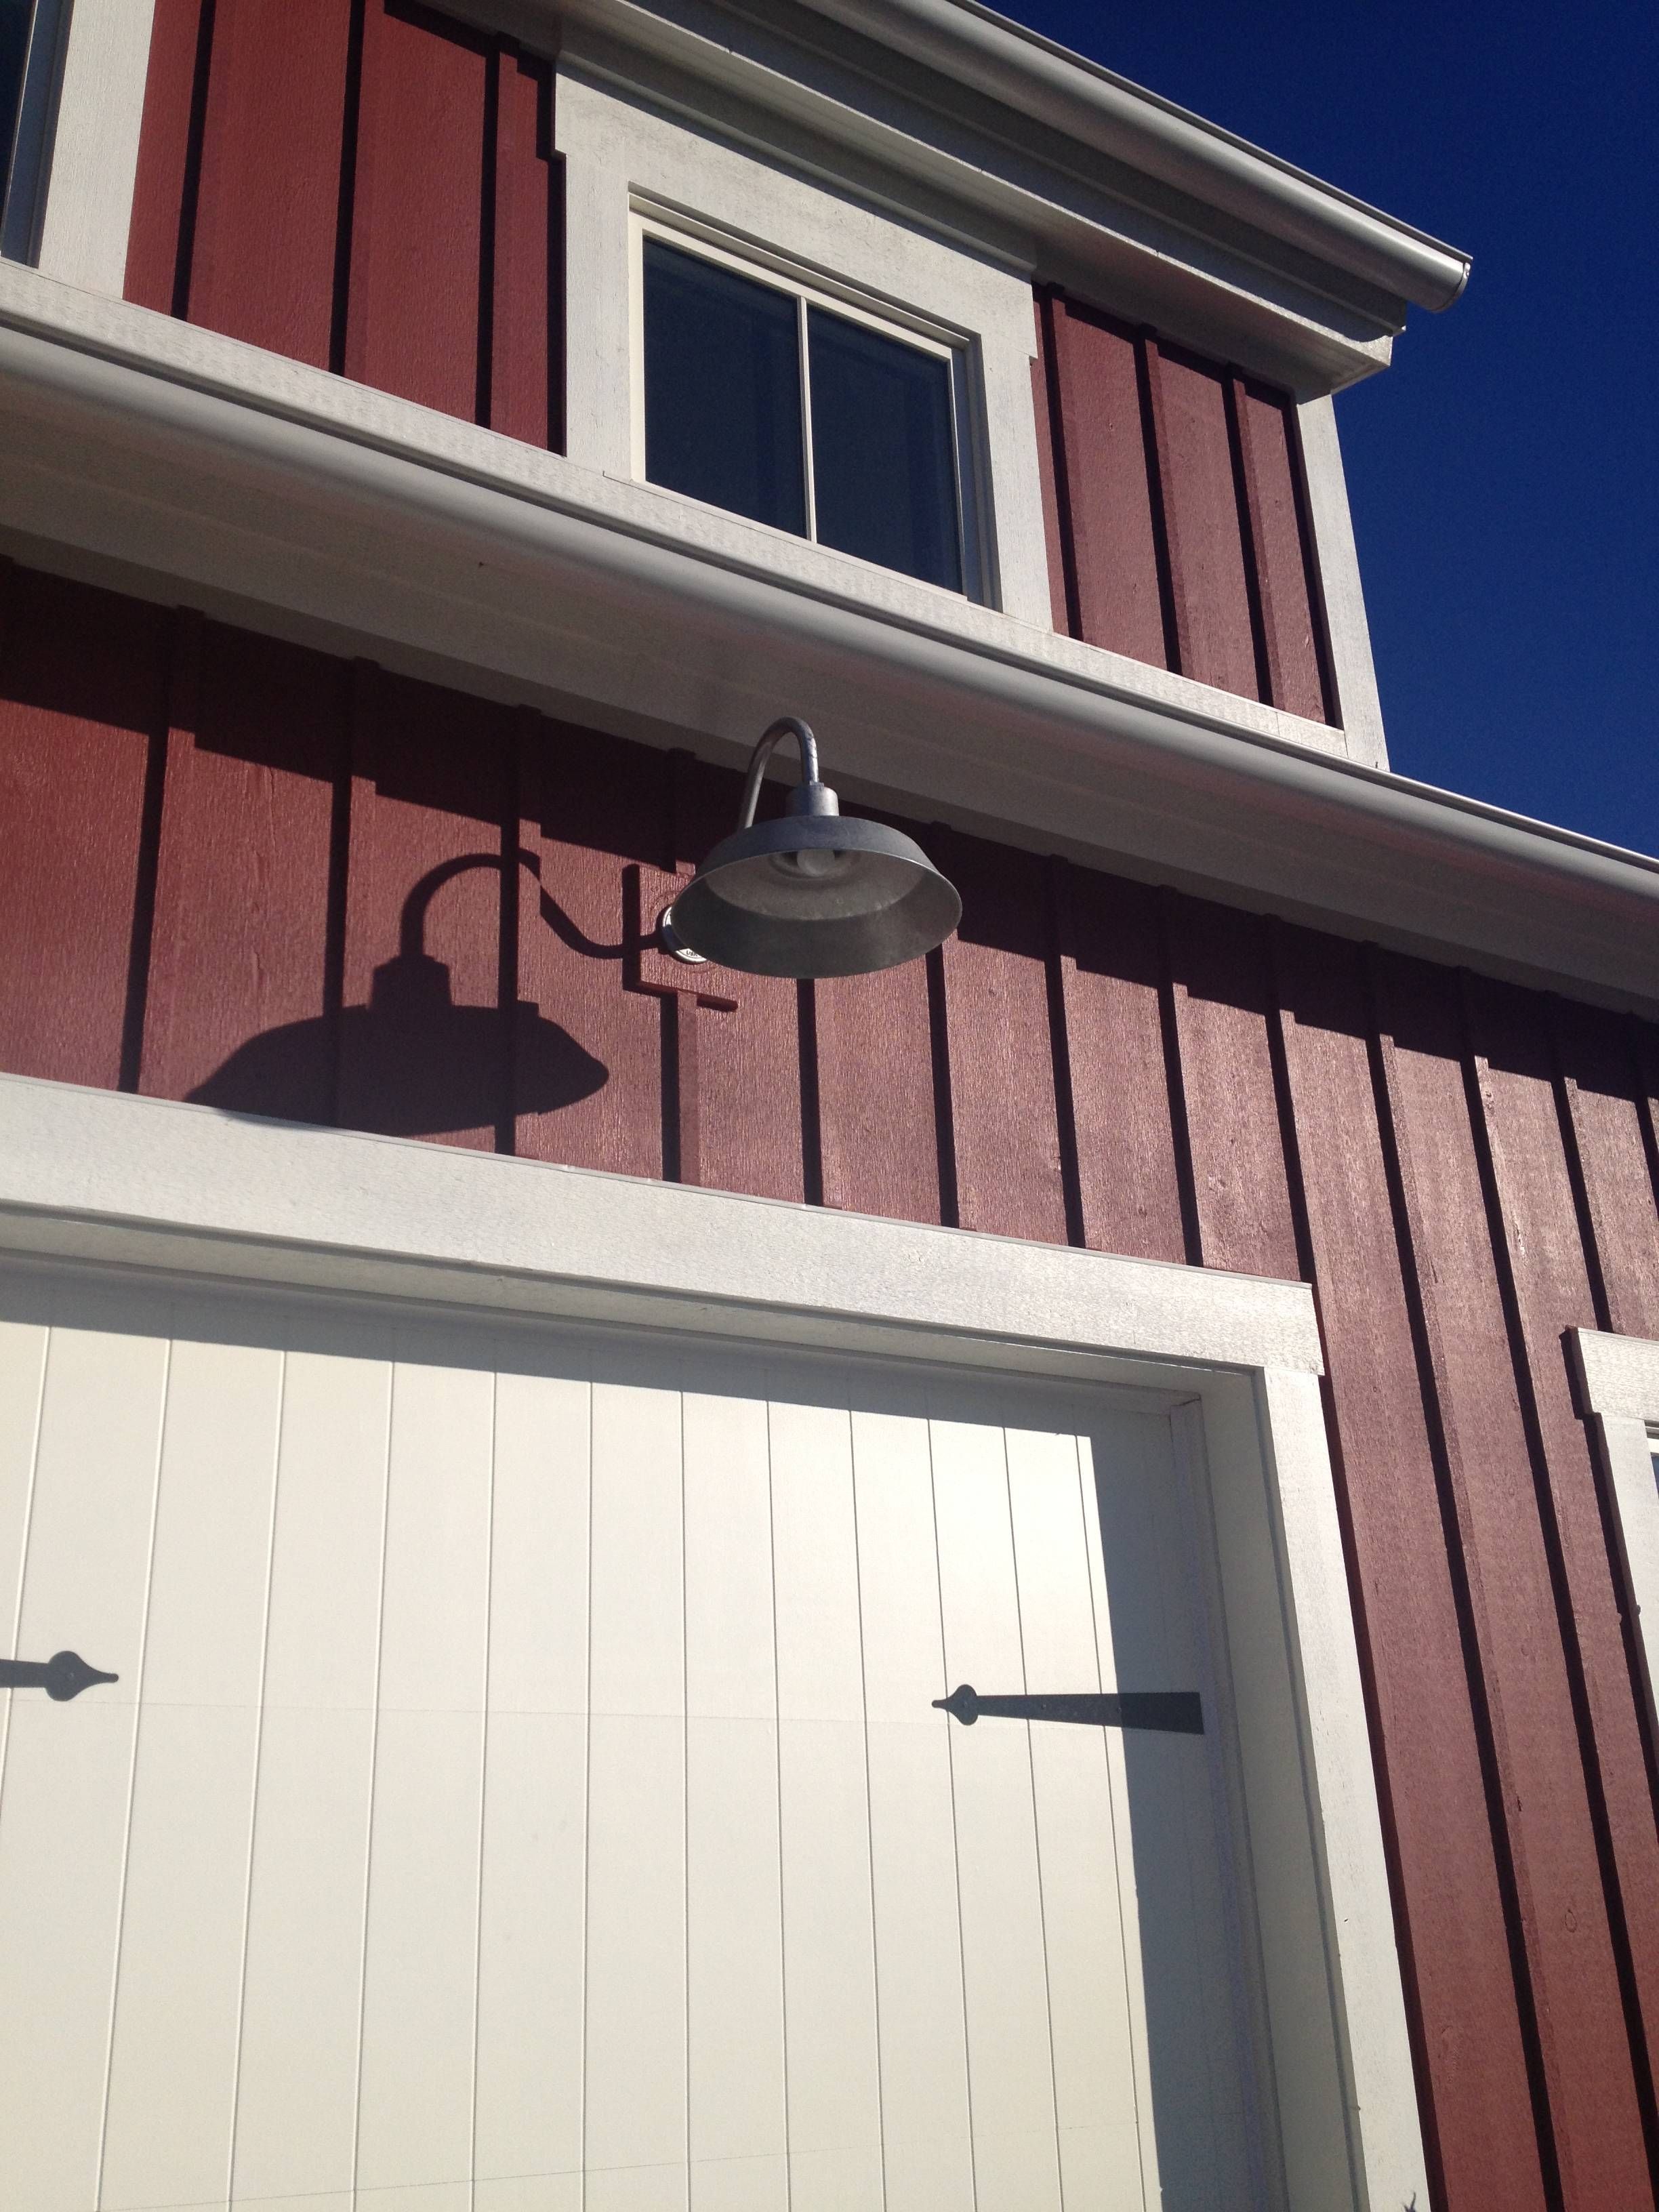 Barn Light Originals For Modern Farmhouse Lighting Inside Galvanized Barn Lights (View 7 of 15)